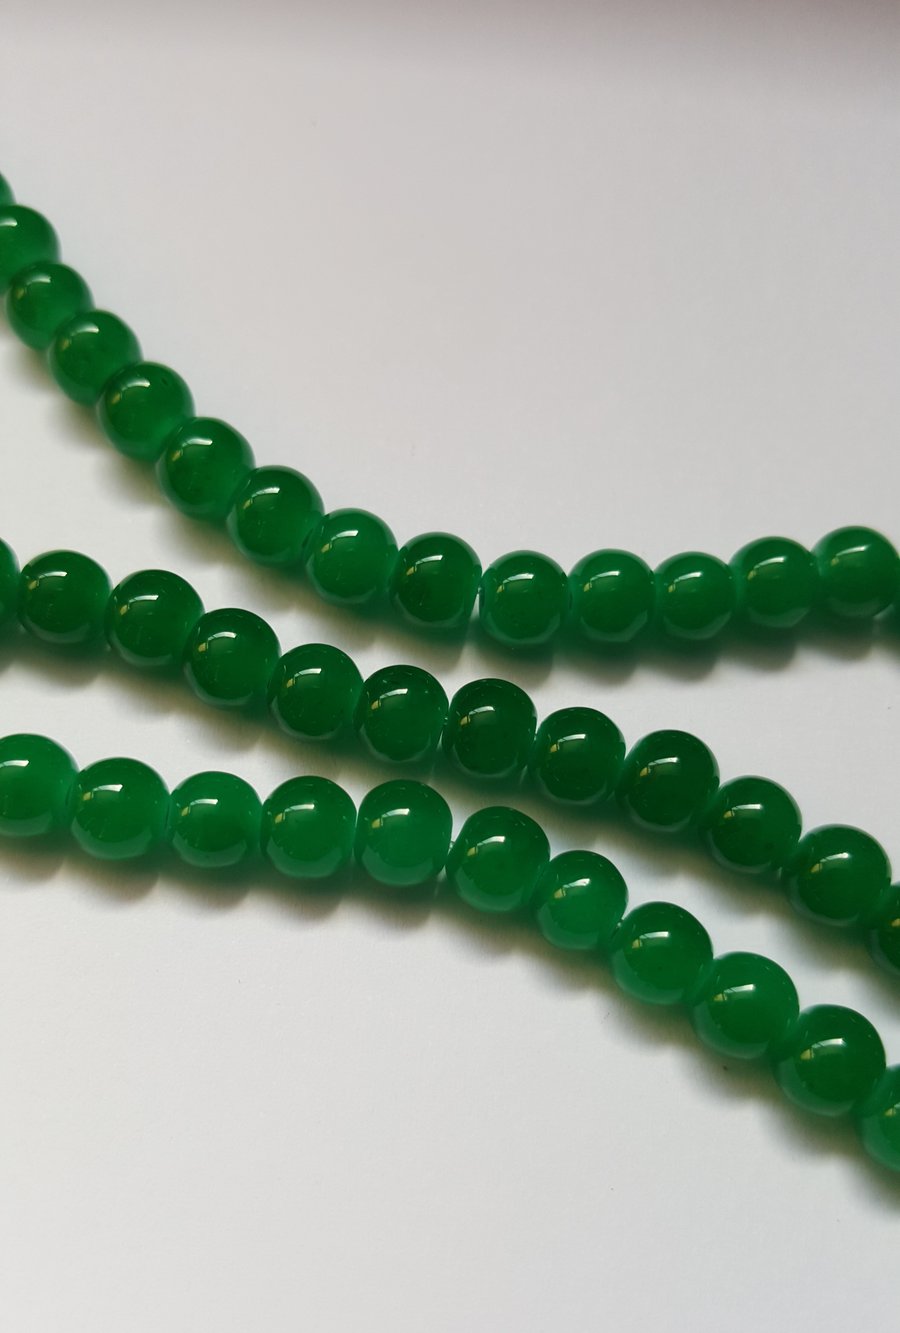 50 x Imitation Jade Glass Beads - Round - 6mm - Green 